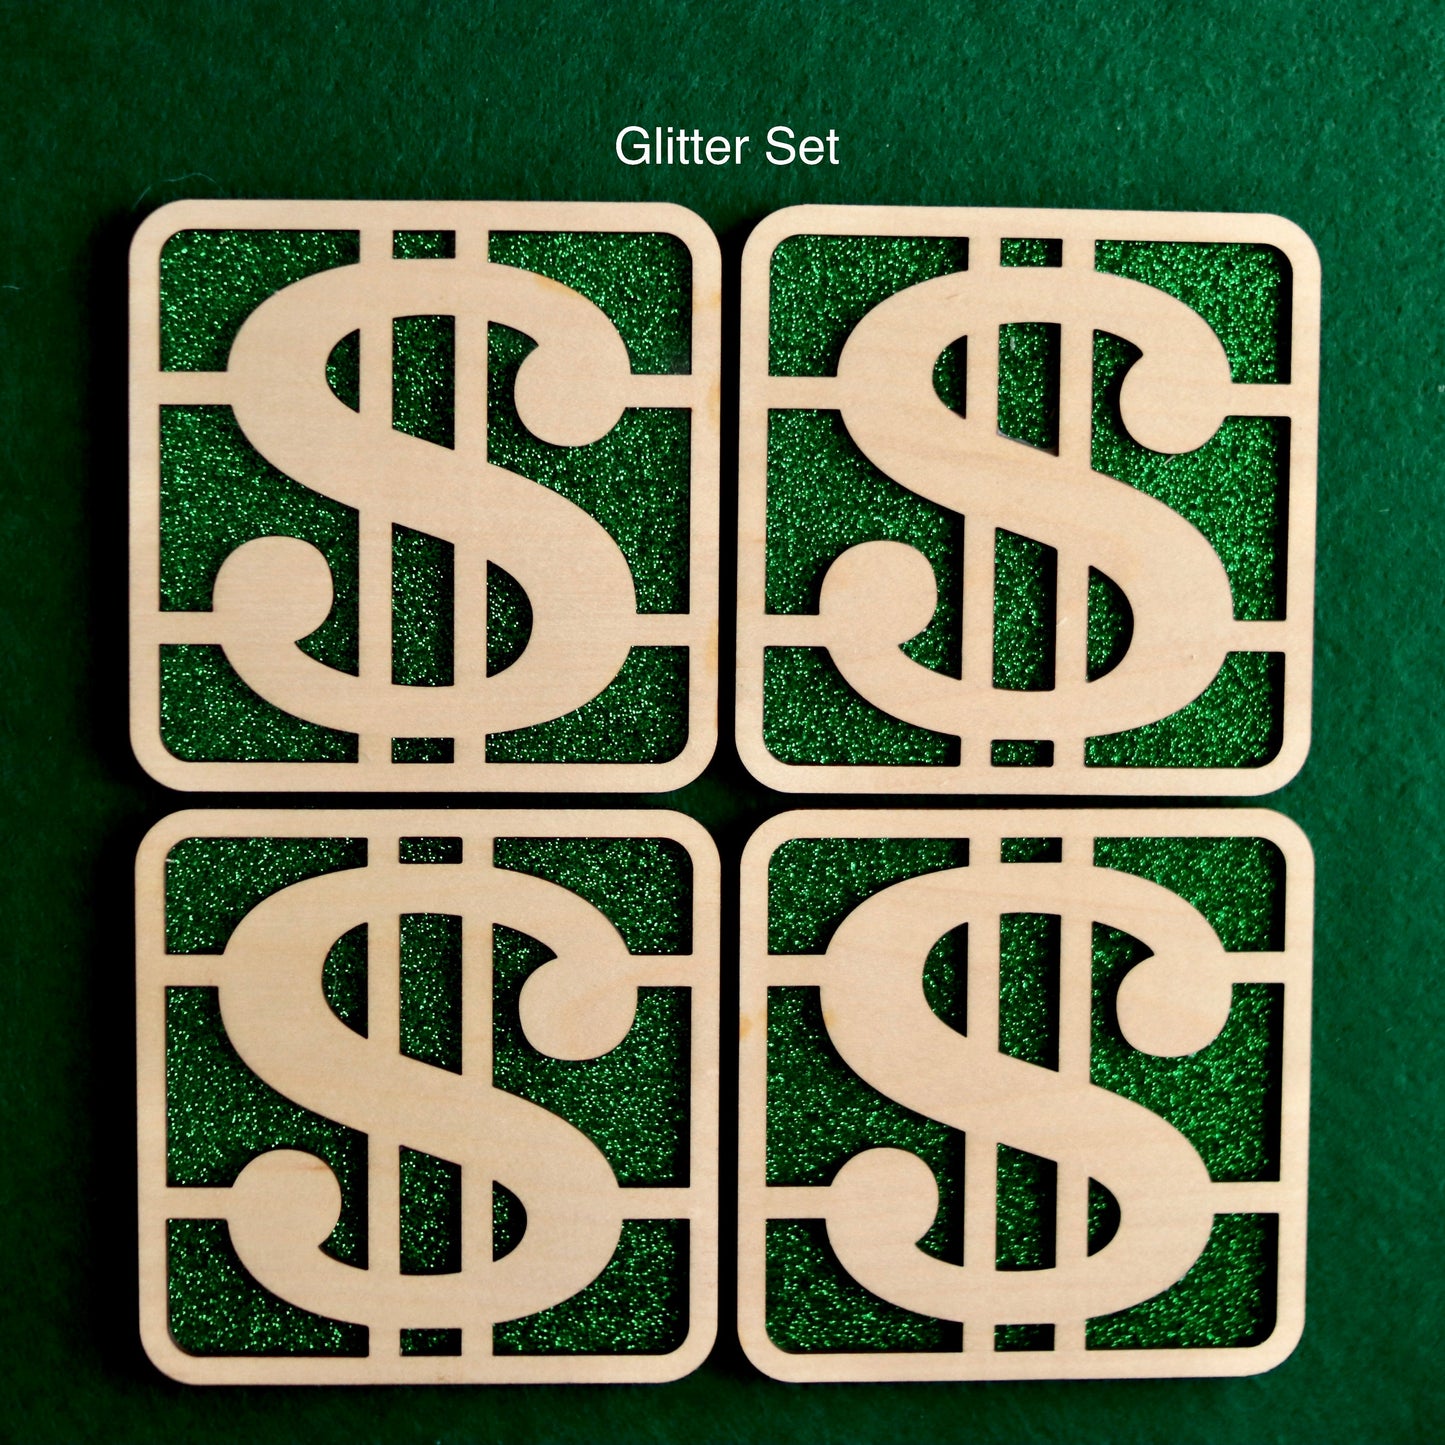 Casino Slot Players Coaster Set, Dollar Money Sign, Casino Theme Game Night, Poker Player Decor, Man Cave, Stocking Stuffer, Good Luck Green